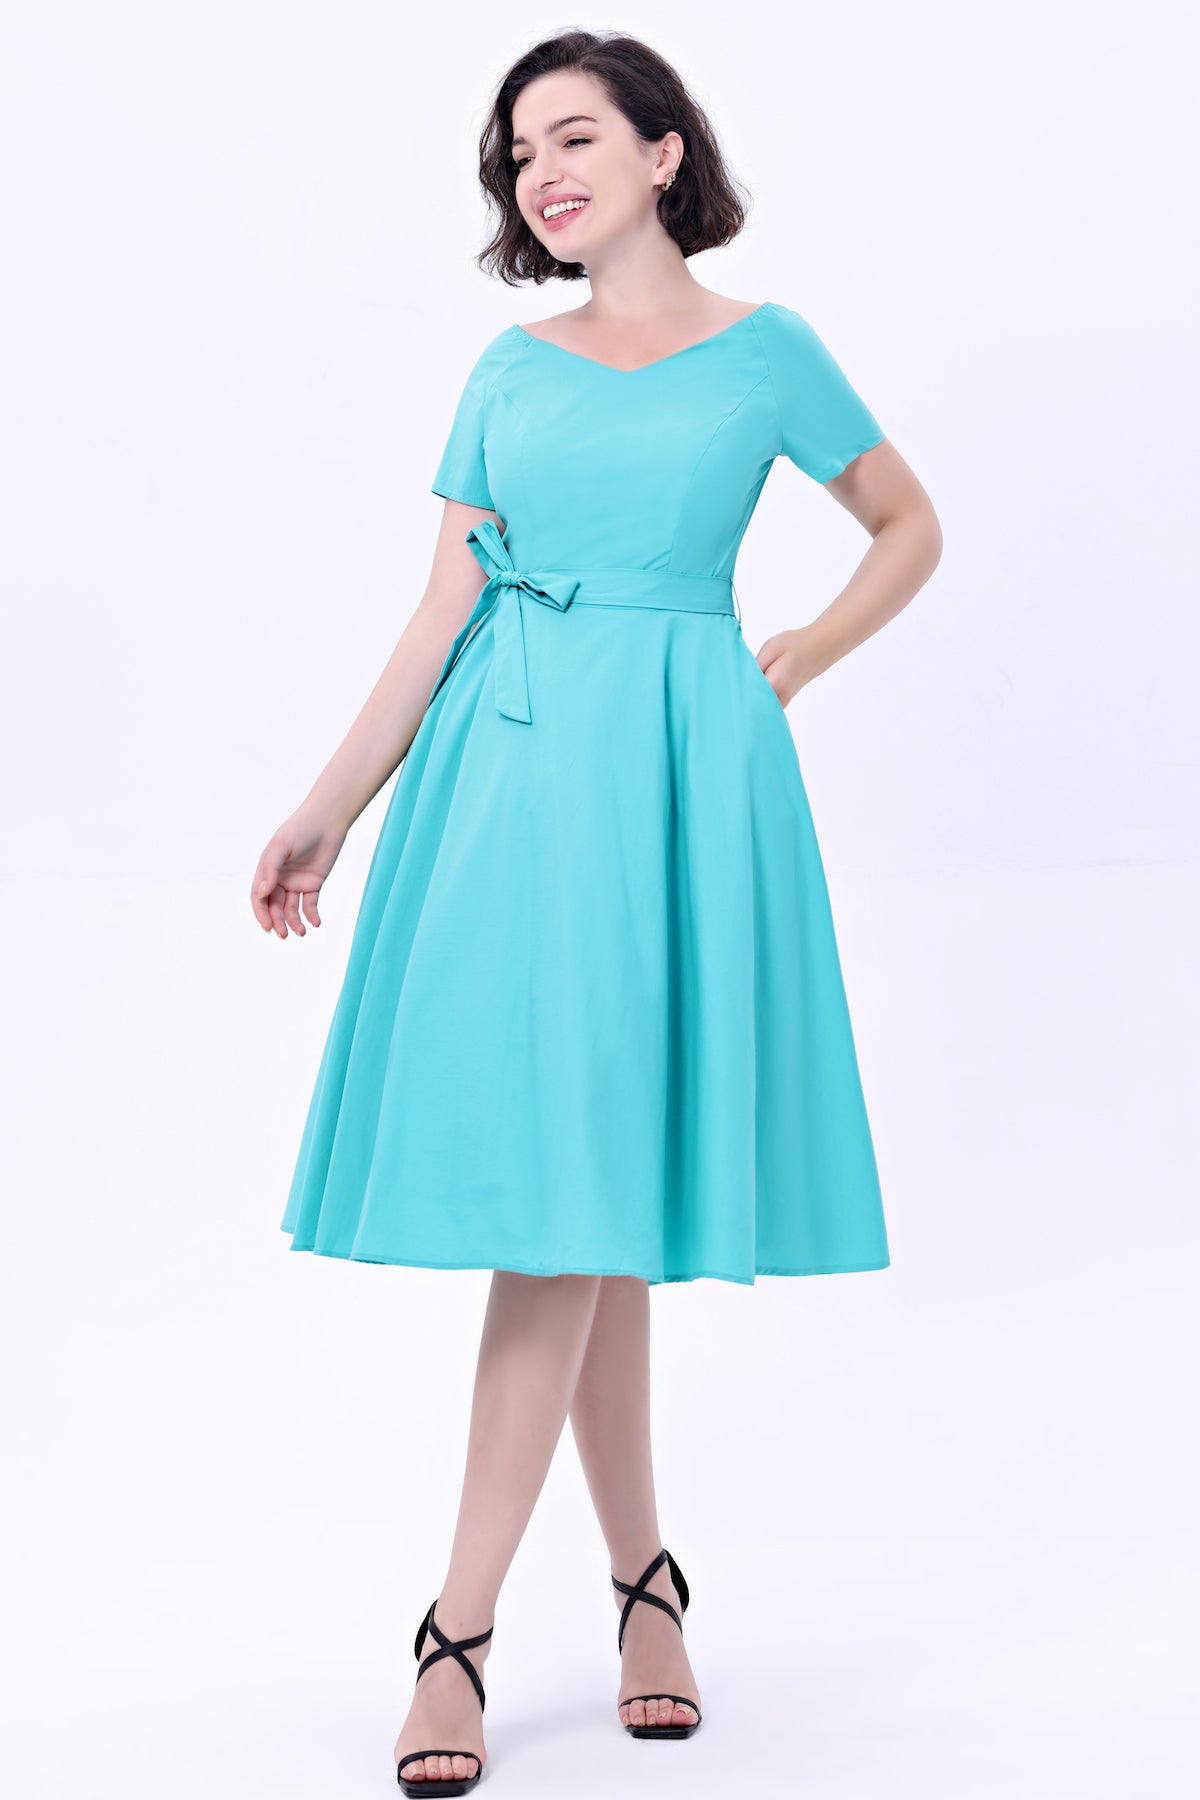 Turquoise Blue Dress